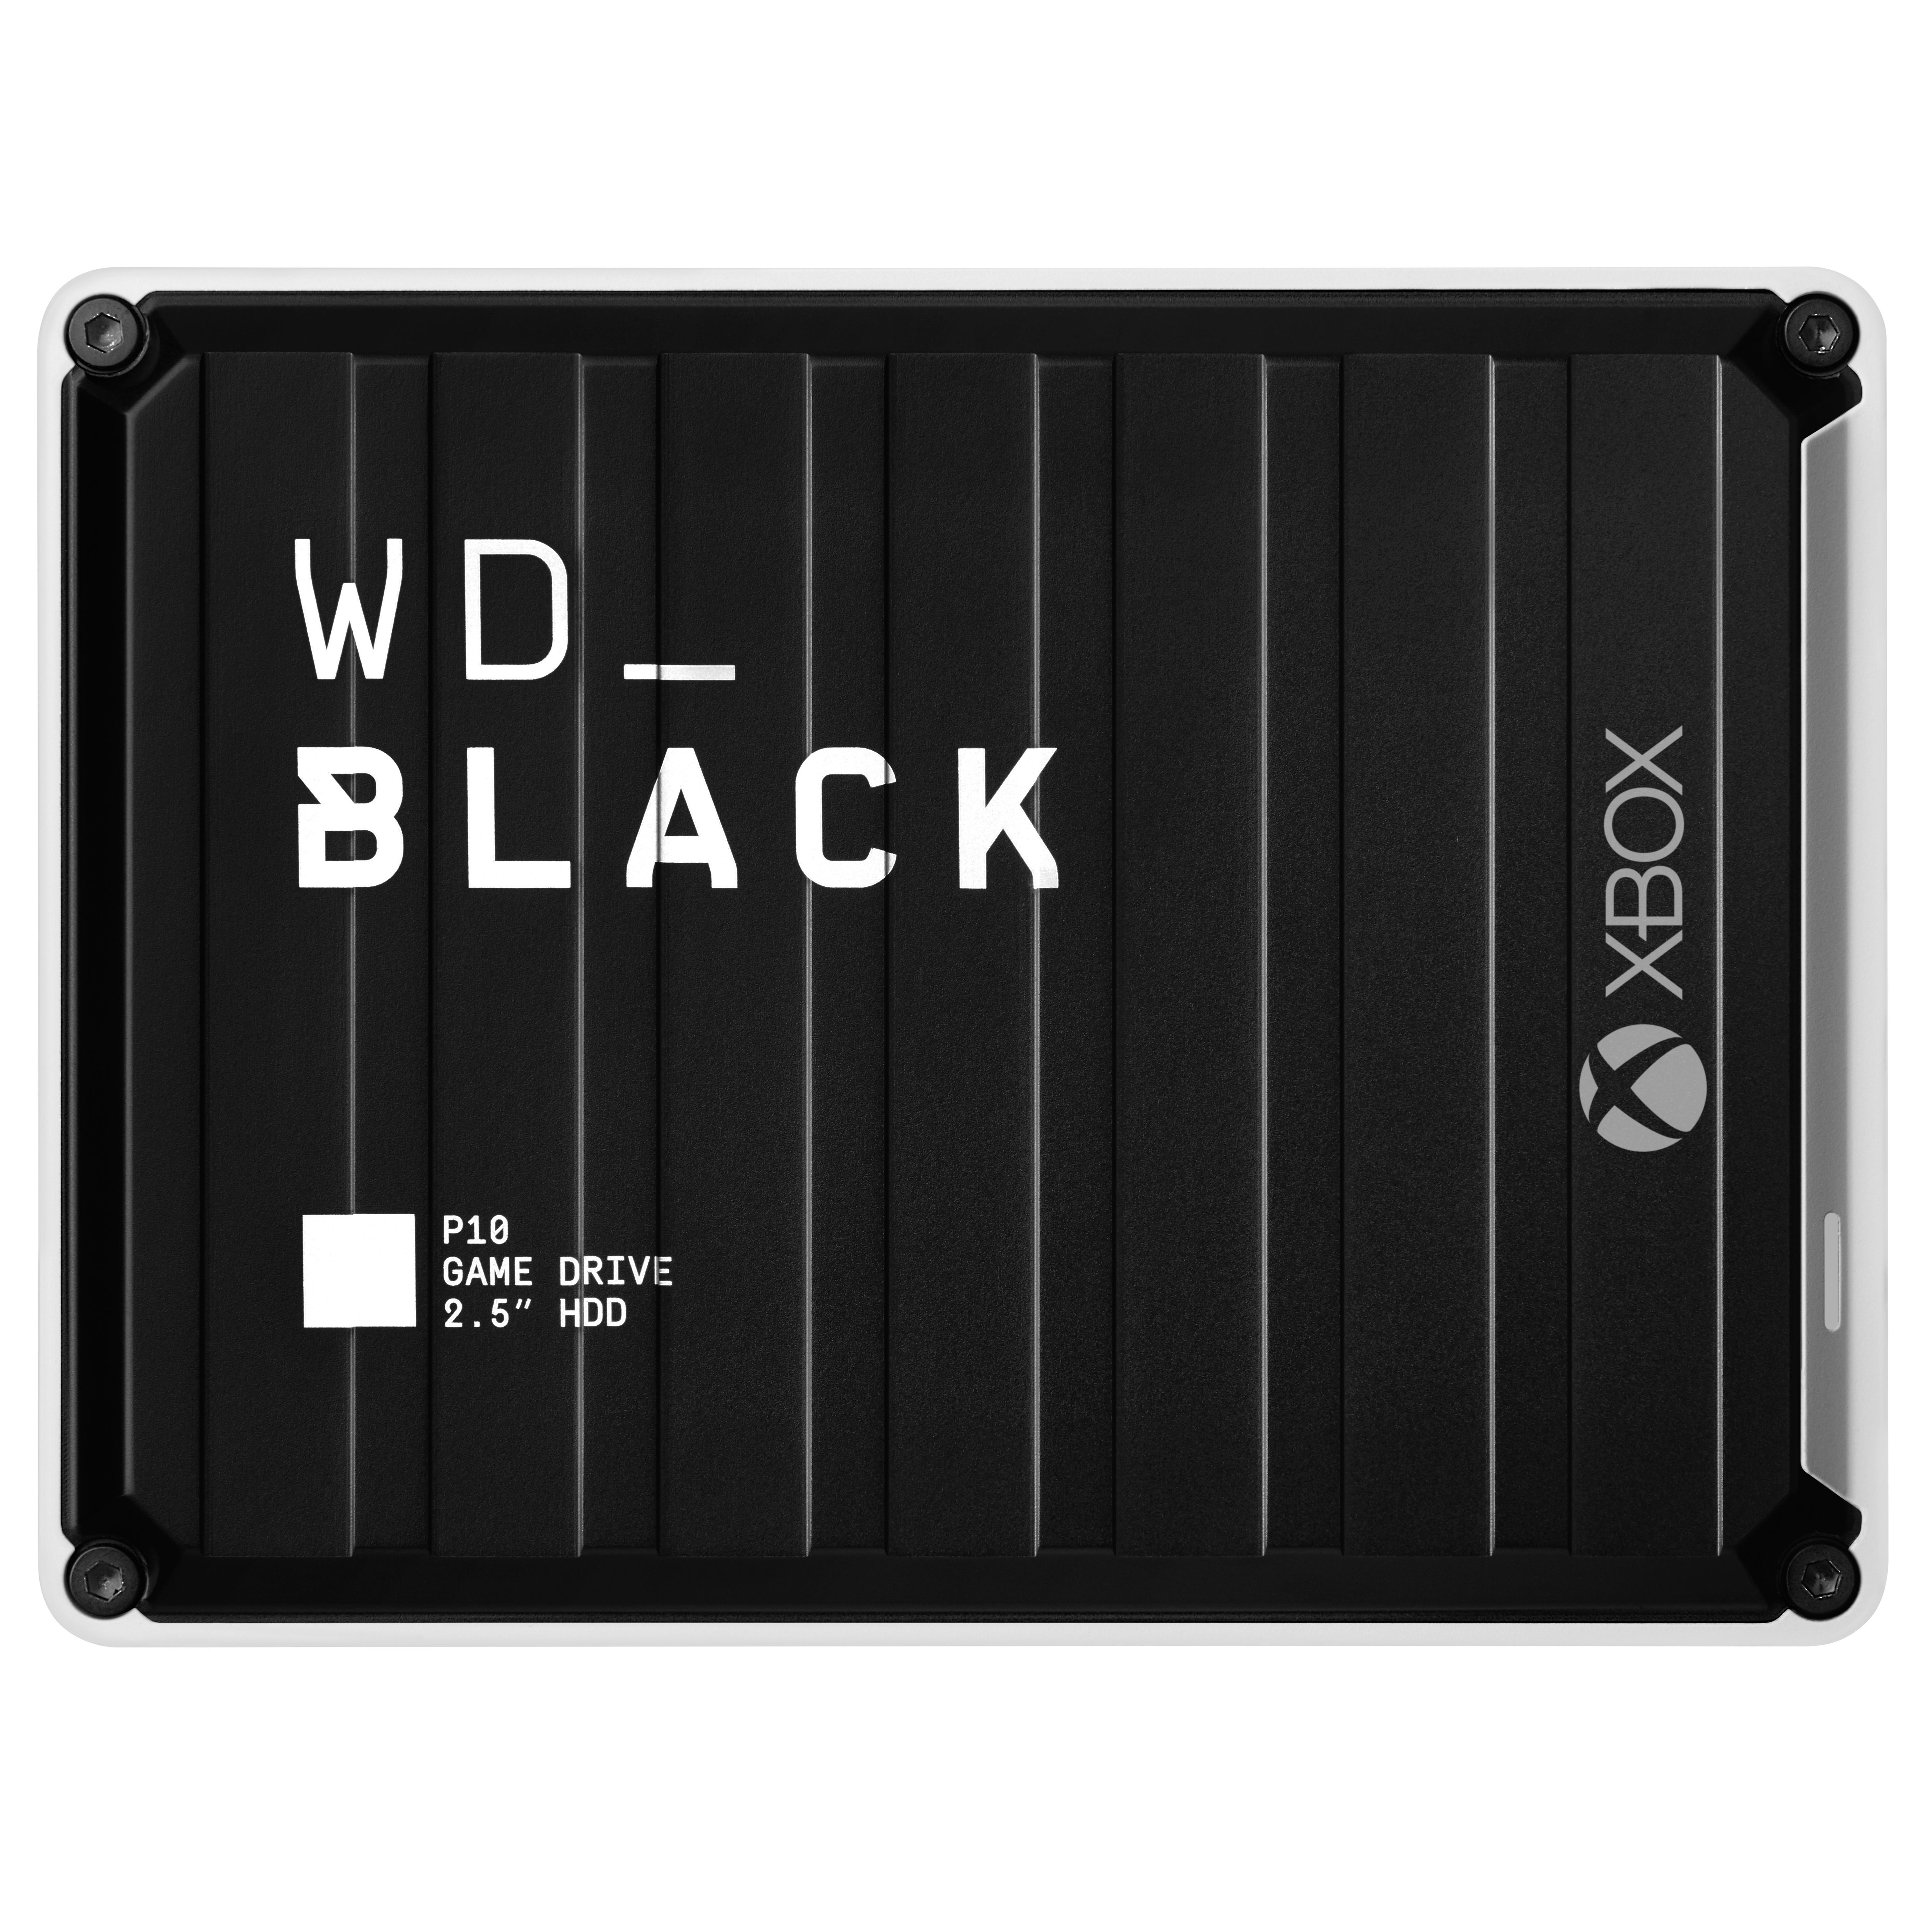 WD_BLACK™ P10 Game Drive for Gaming Festplatte, 4 Schwarz/Weiß TB, Xbox™